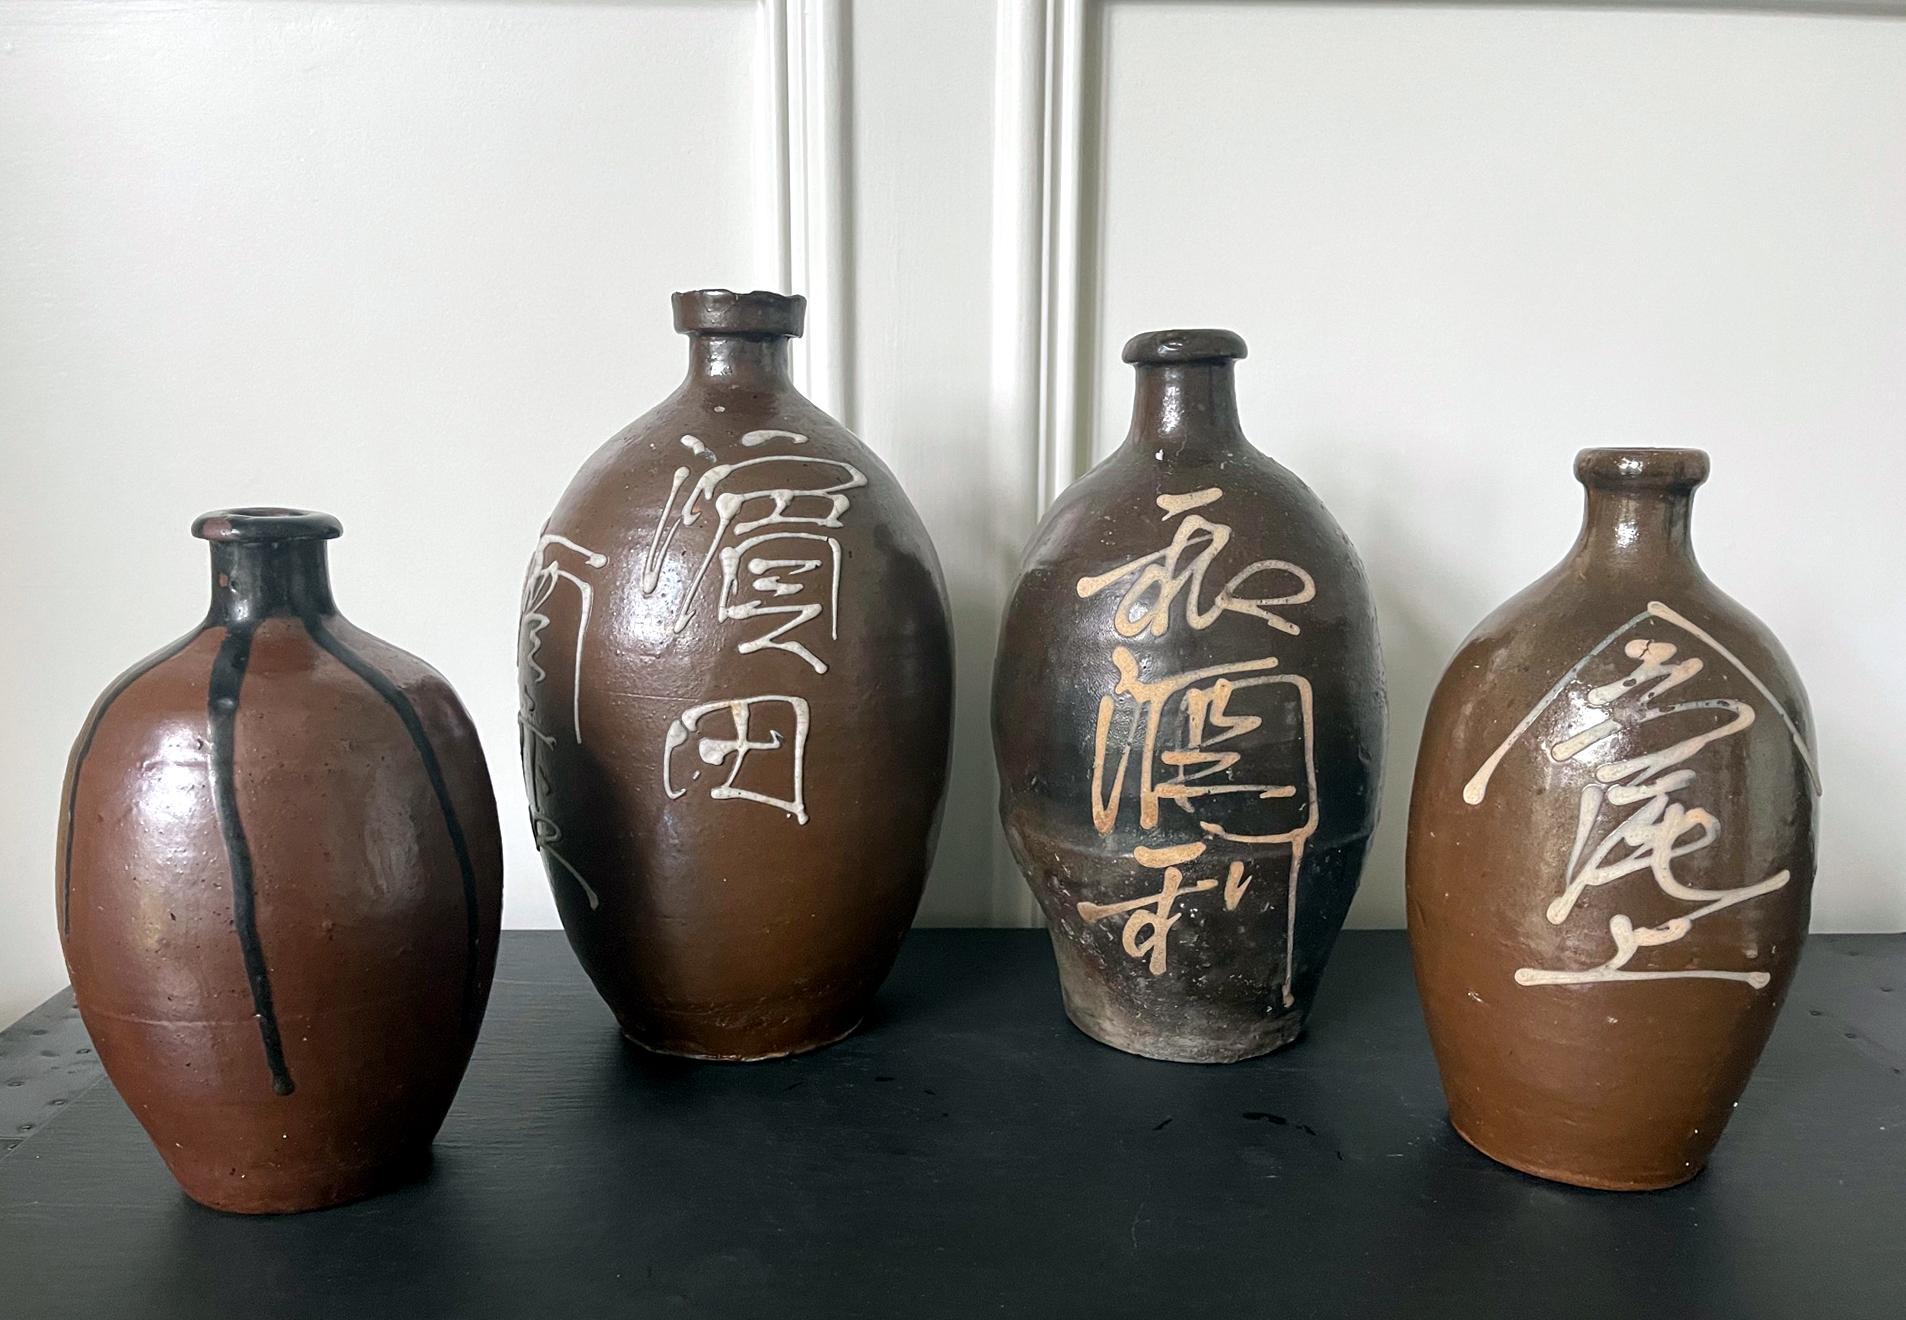 A set of four Japanese Ceramic Tokkuri Sake storage bottles circa early 20th century (Meiji to Taisho period). The bottles were made in Tamba (Tanba) kilns, located in Tachikui, Hyogo Prefecture. One of the six ancient kilns in Japan, the origin of